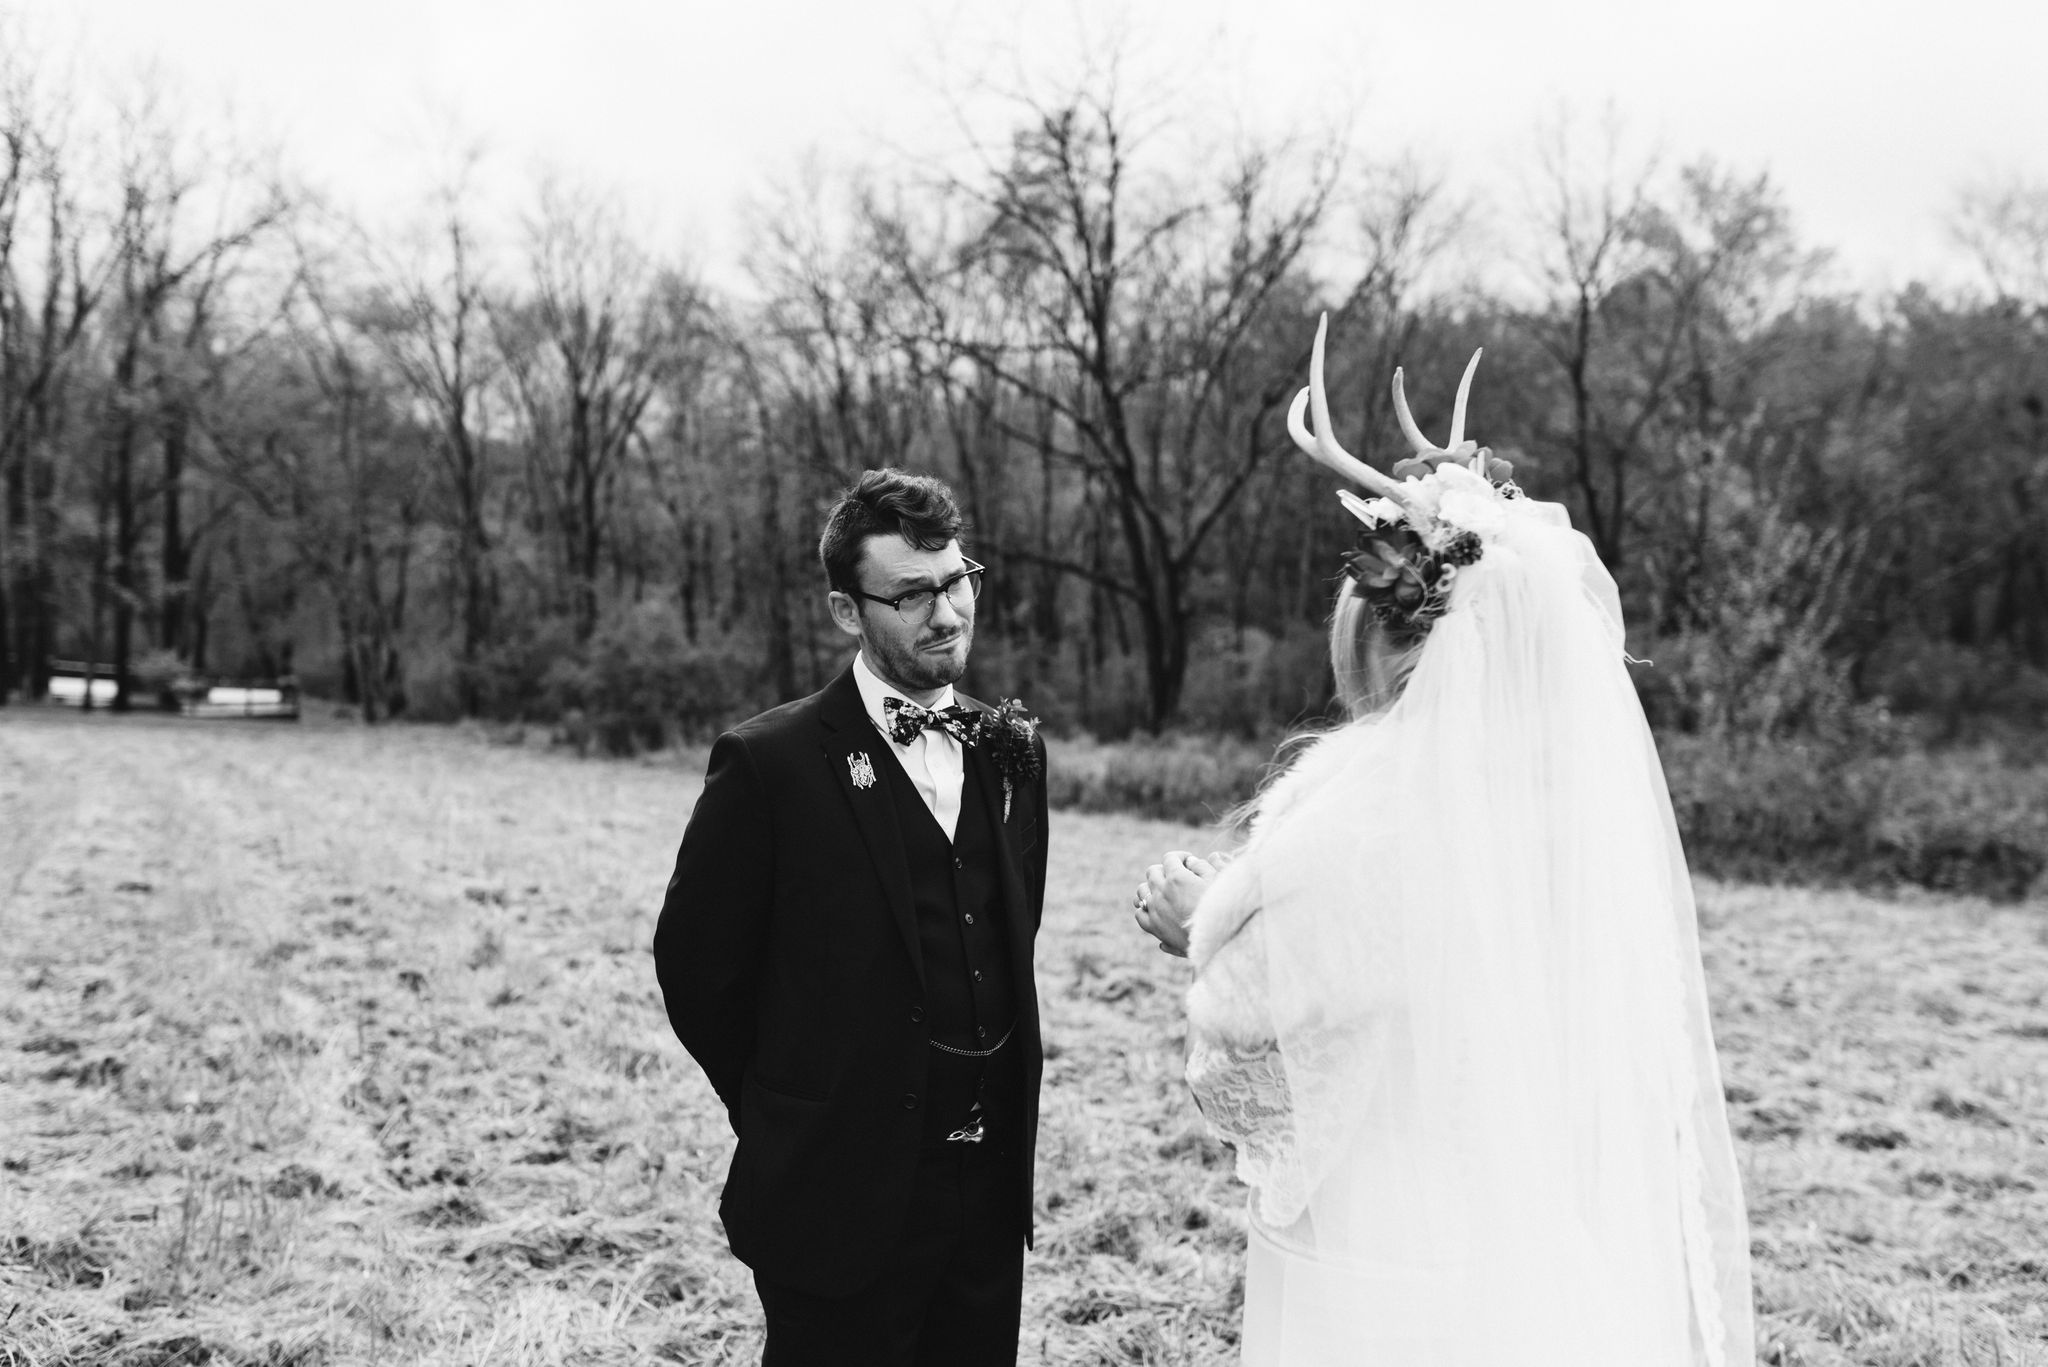  Maryland, Baltimore Wedding Photographer, Backyard Wedding, Fall, October, Dark Bohemian, Whimsical, Fun, Groom During First Look, Black and White Photo 